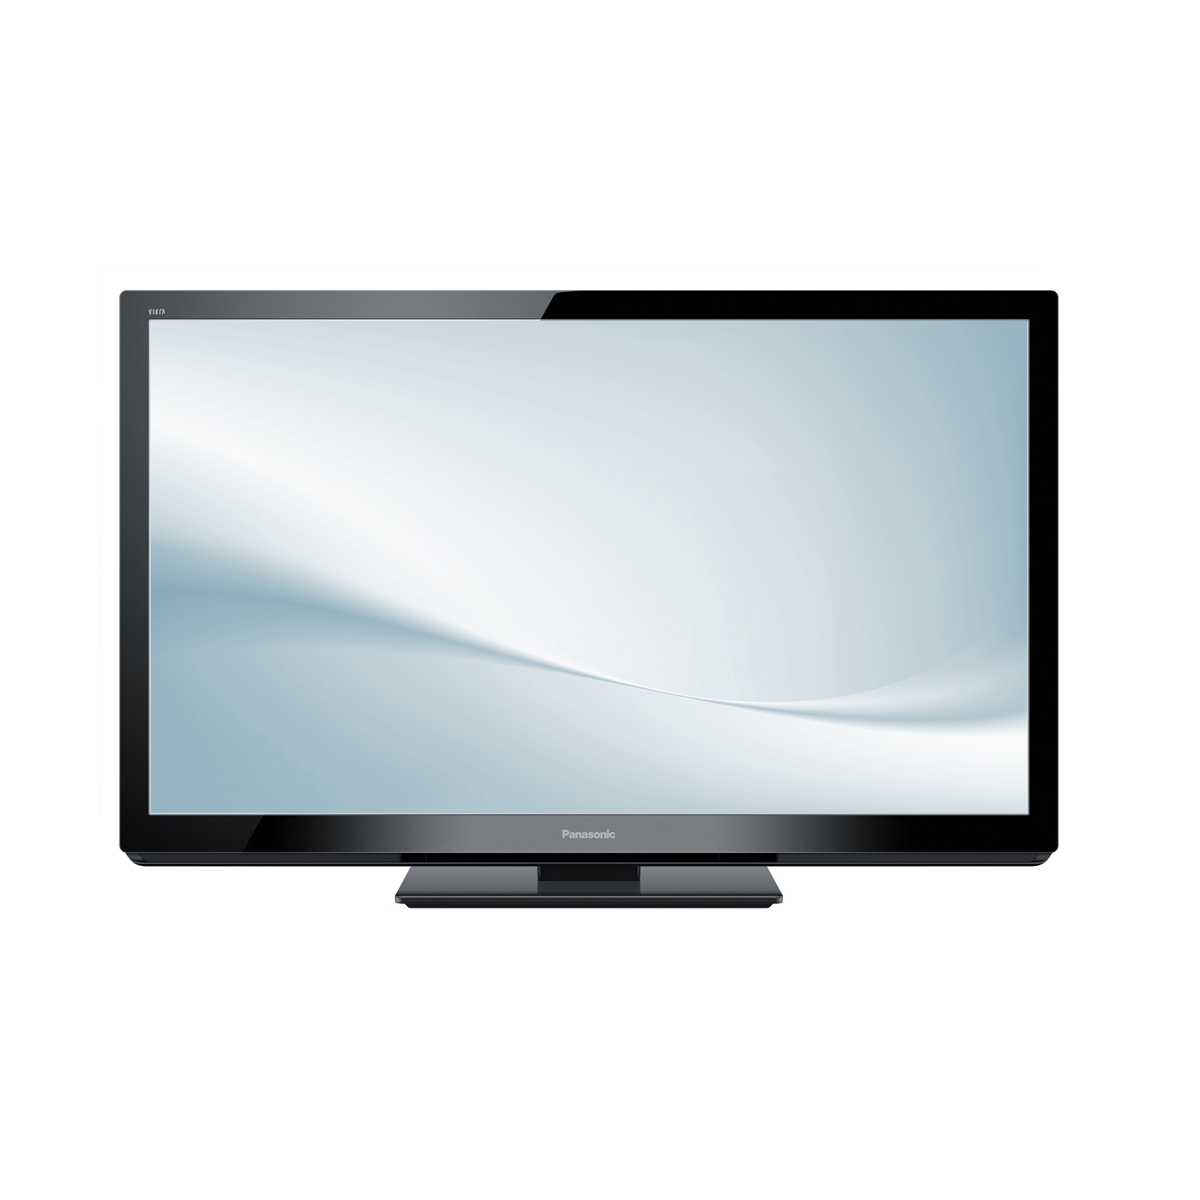 Panasonic TXP42GT30B Plasma Screen - review, compare prices, buy online